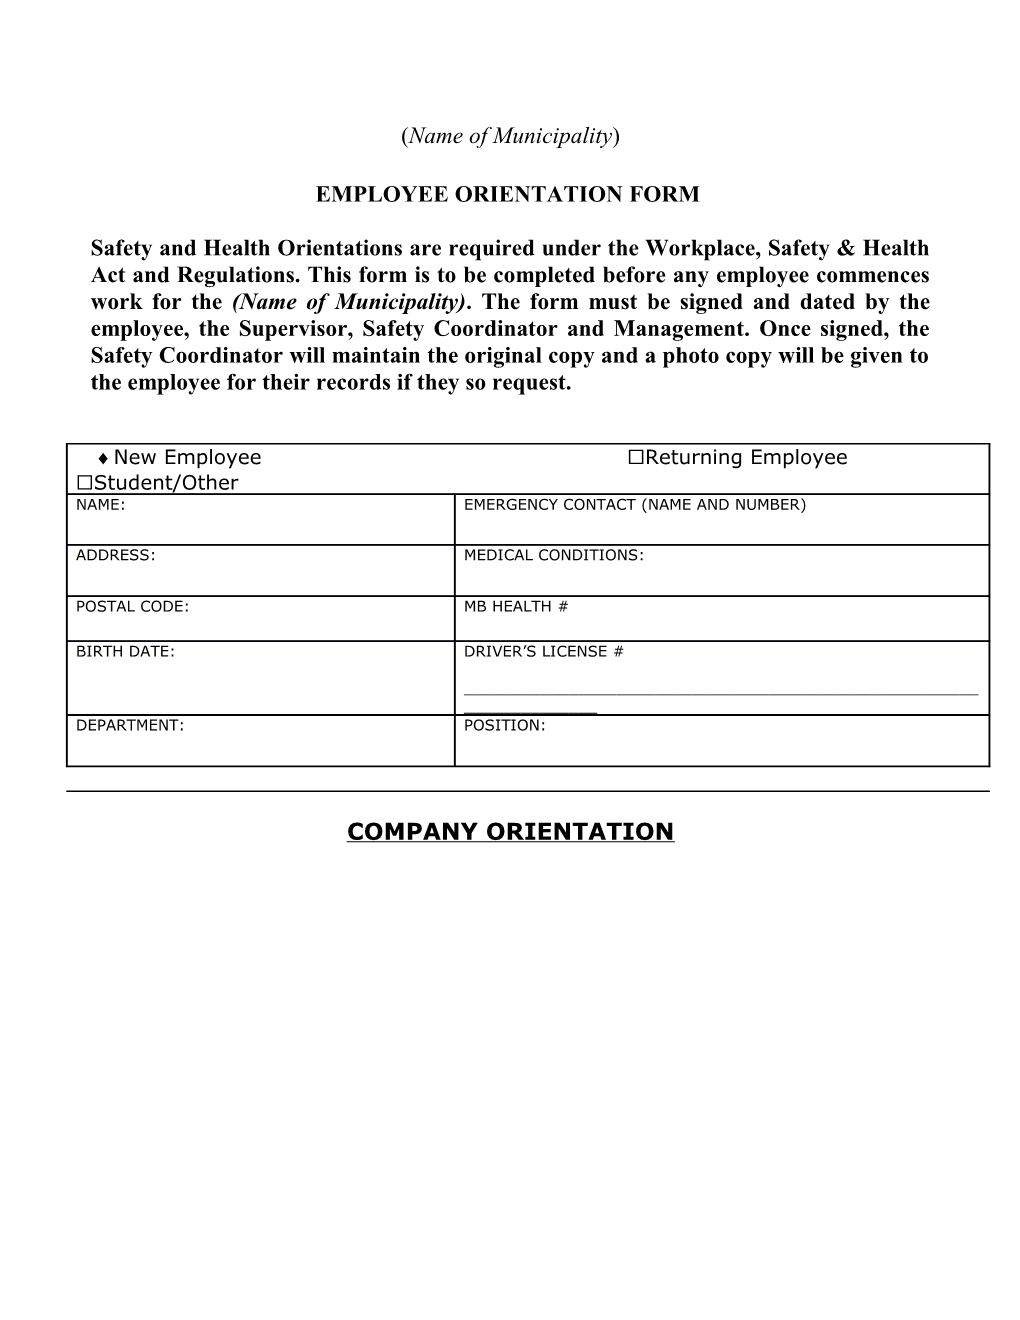 Employee Orientation Form